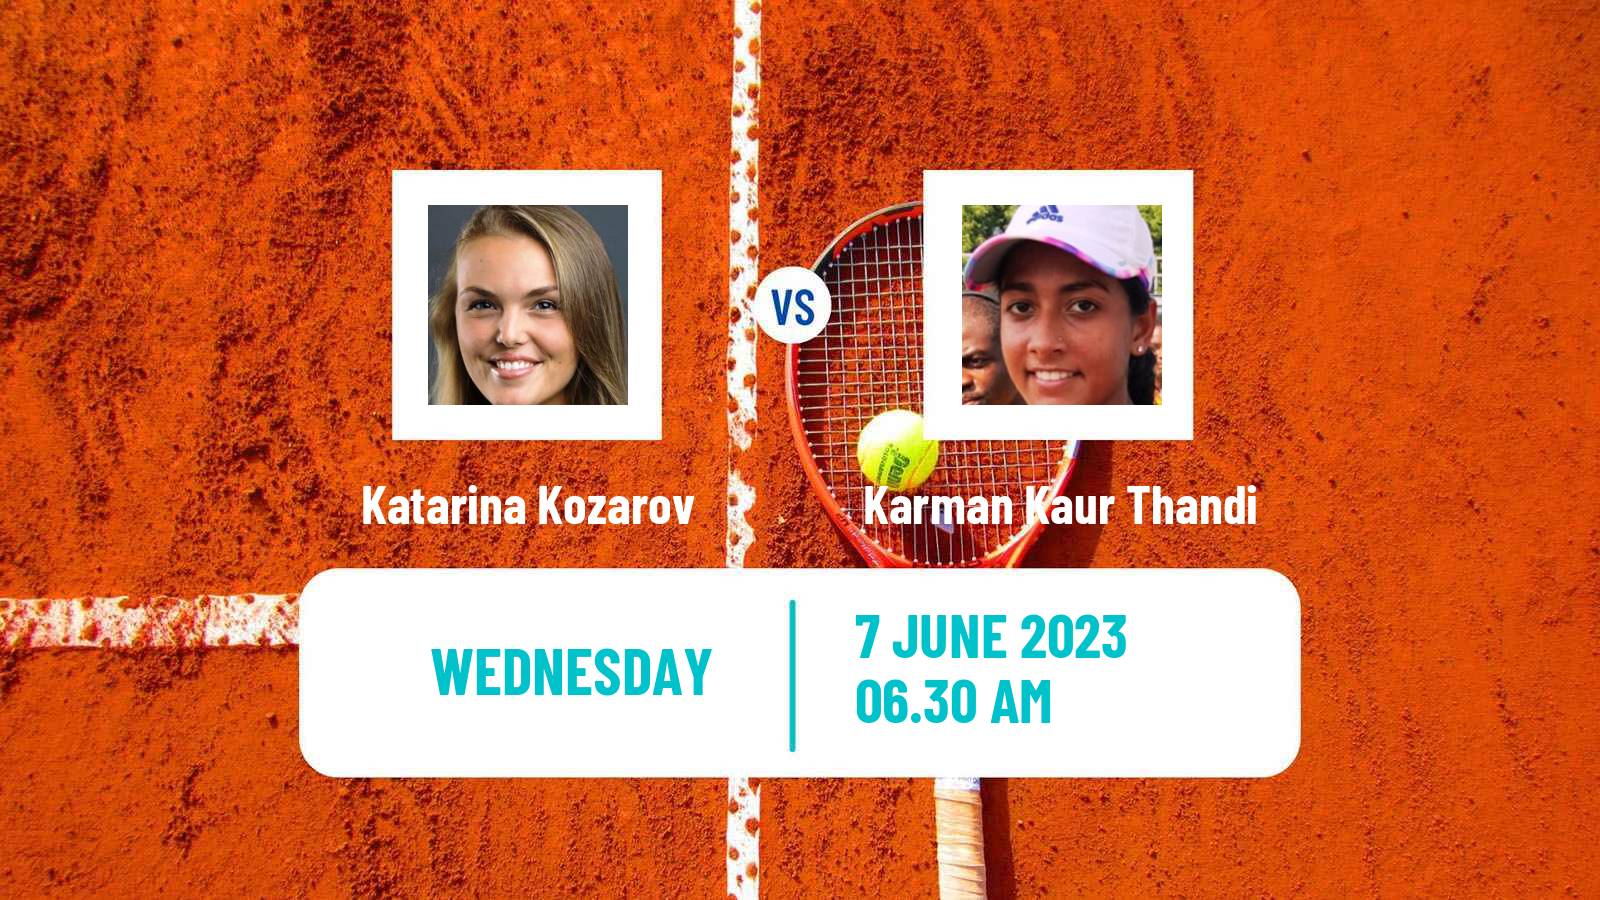 Tennis ITF W25 Setubal Women Katarina Kozarov - Karman Kaur Thandi